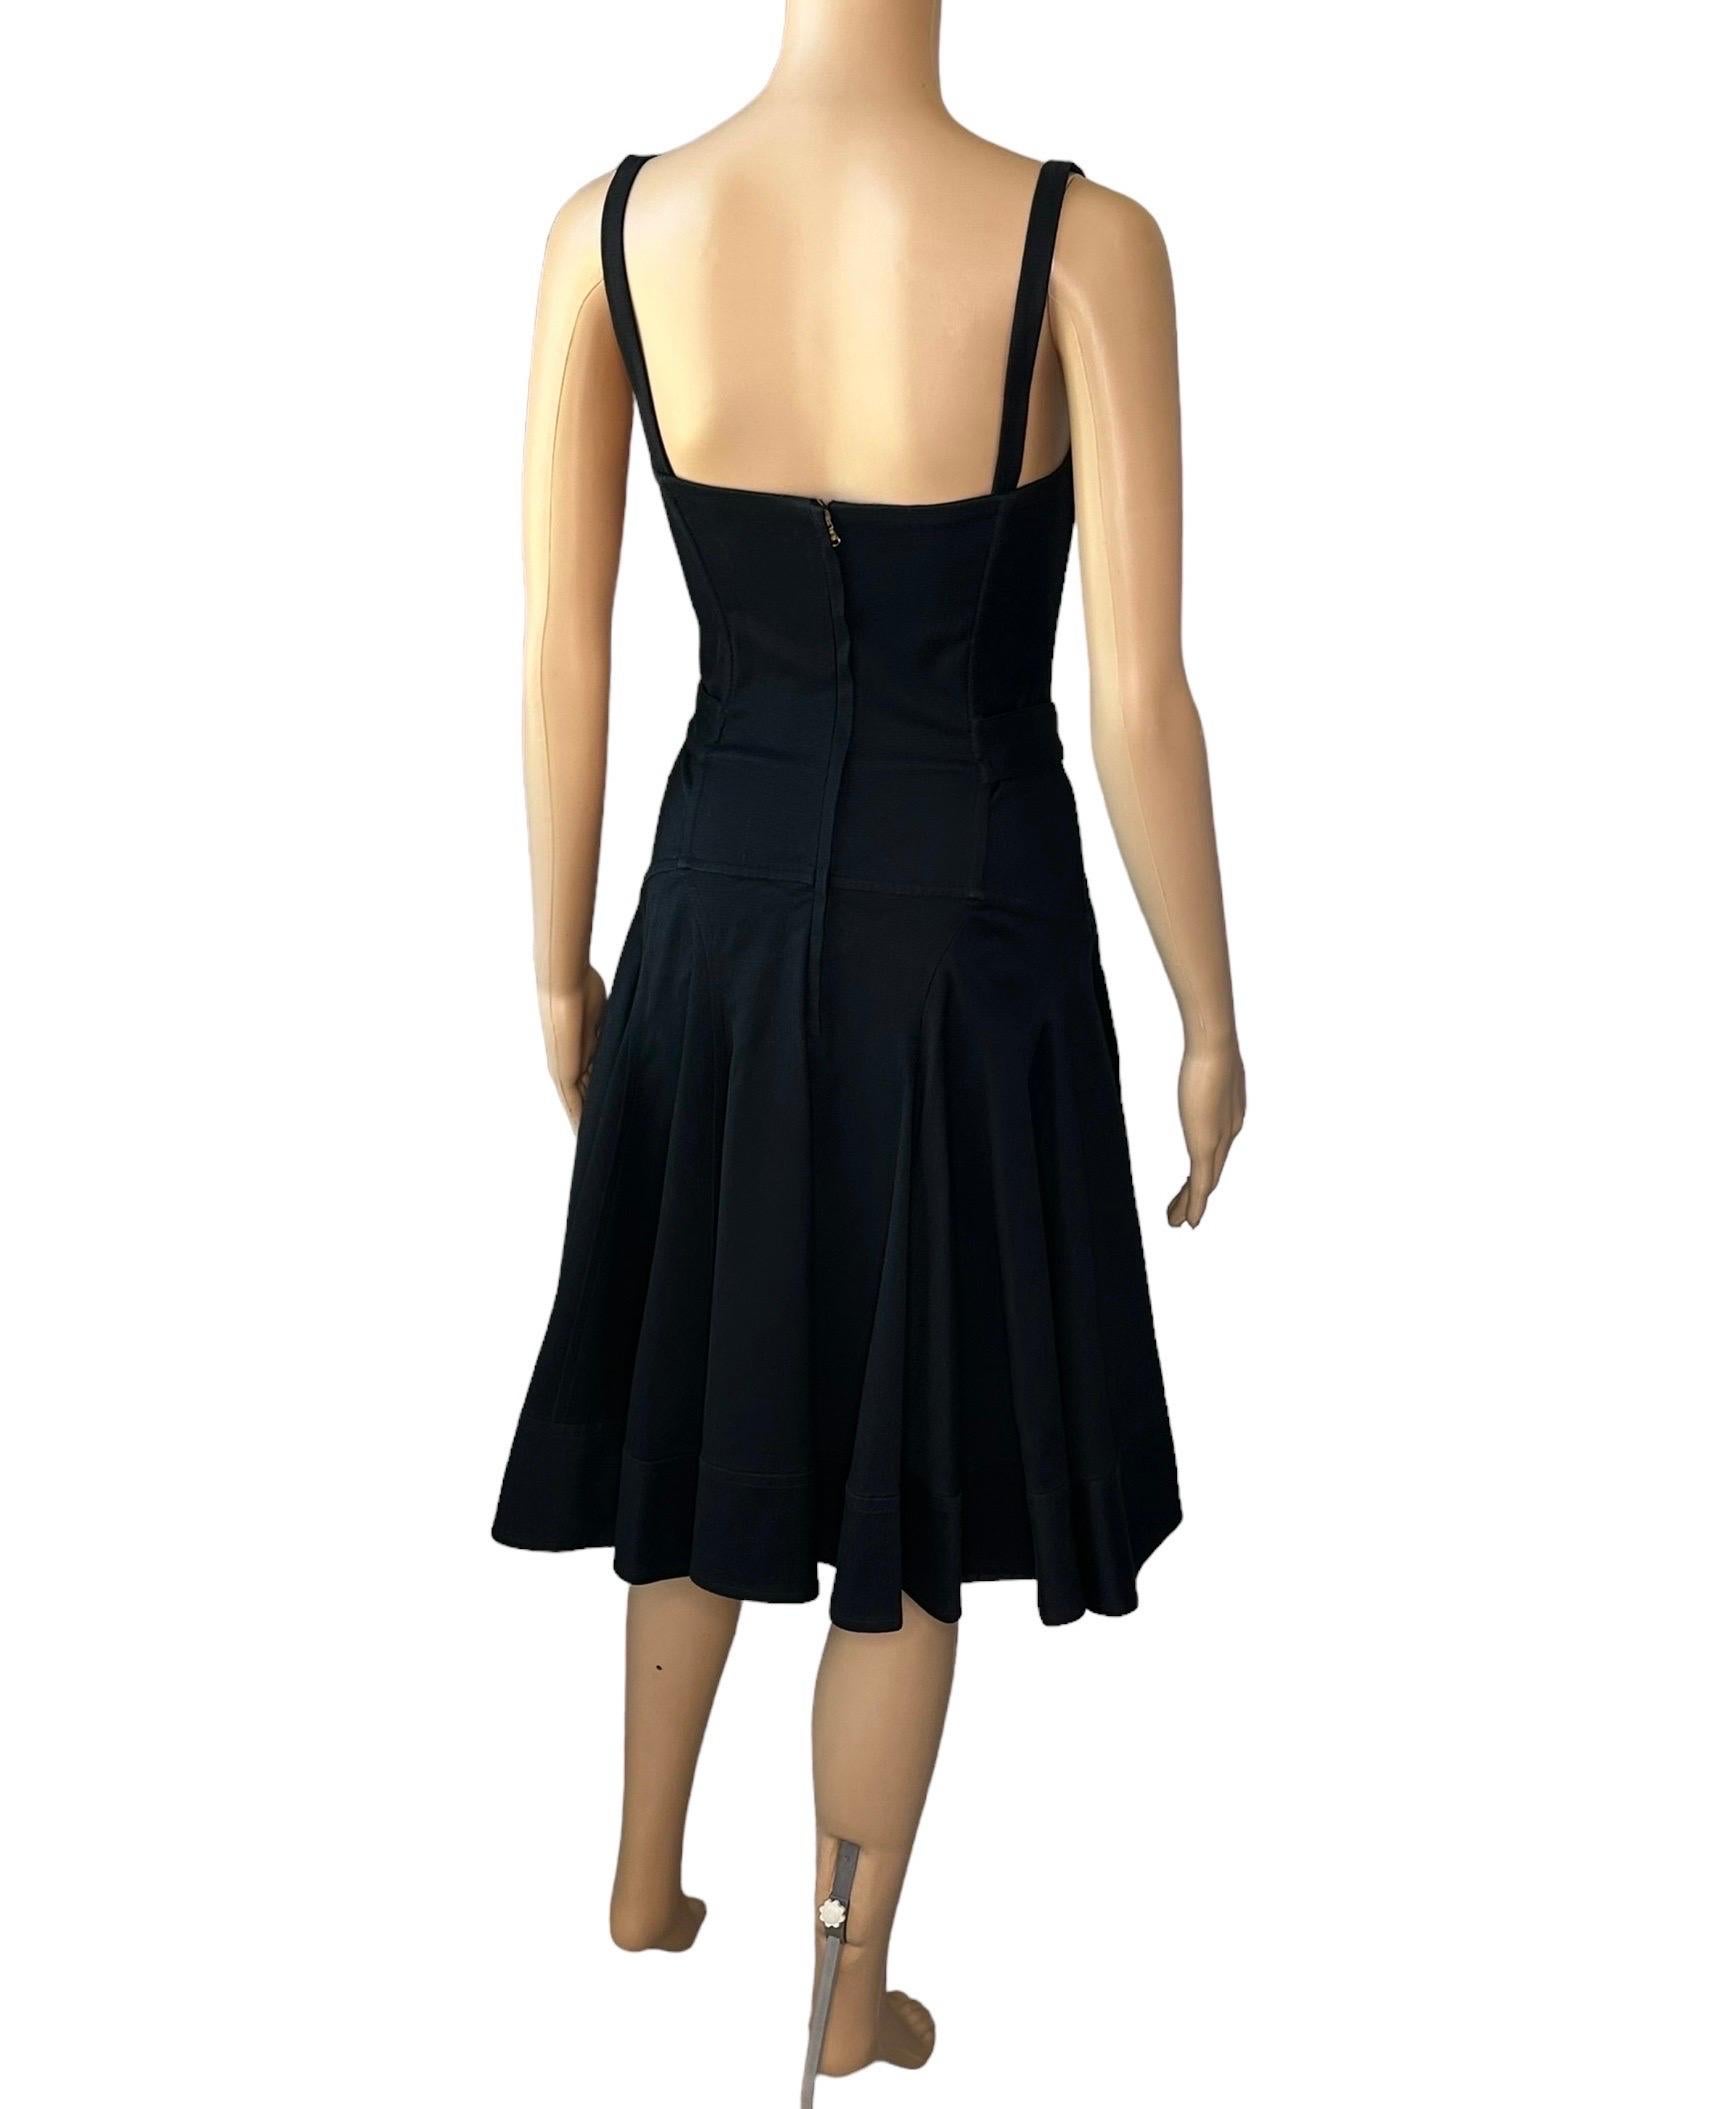 Dolce & Gabbana S/S 2007 Unworn Corset Lace-Up Bustier Black Dress For Sale 7